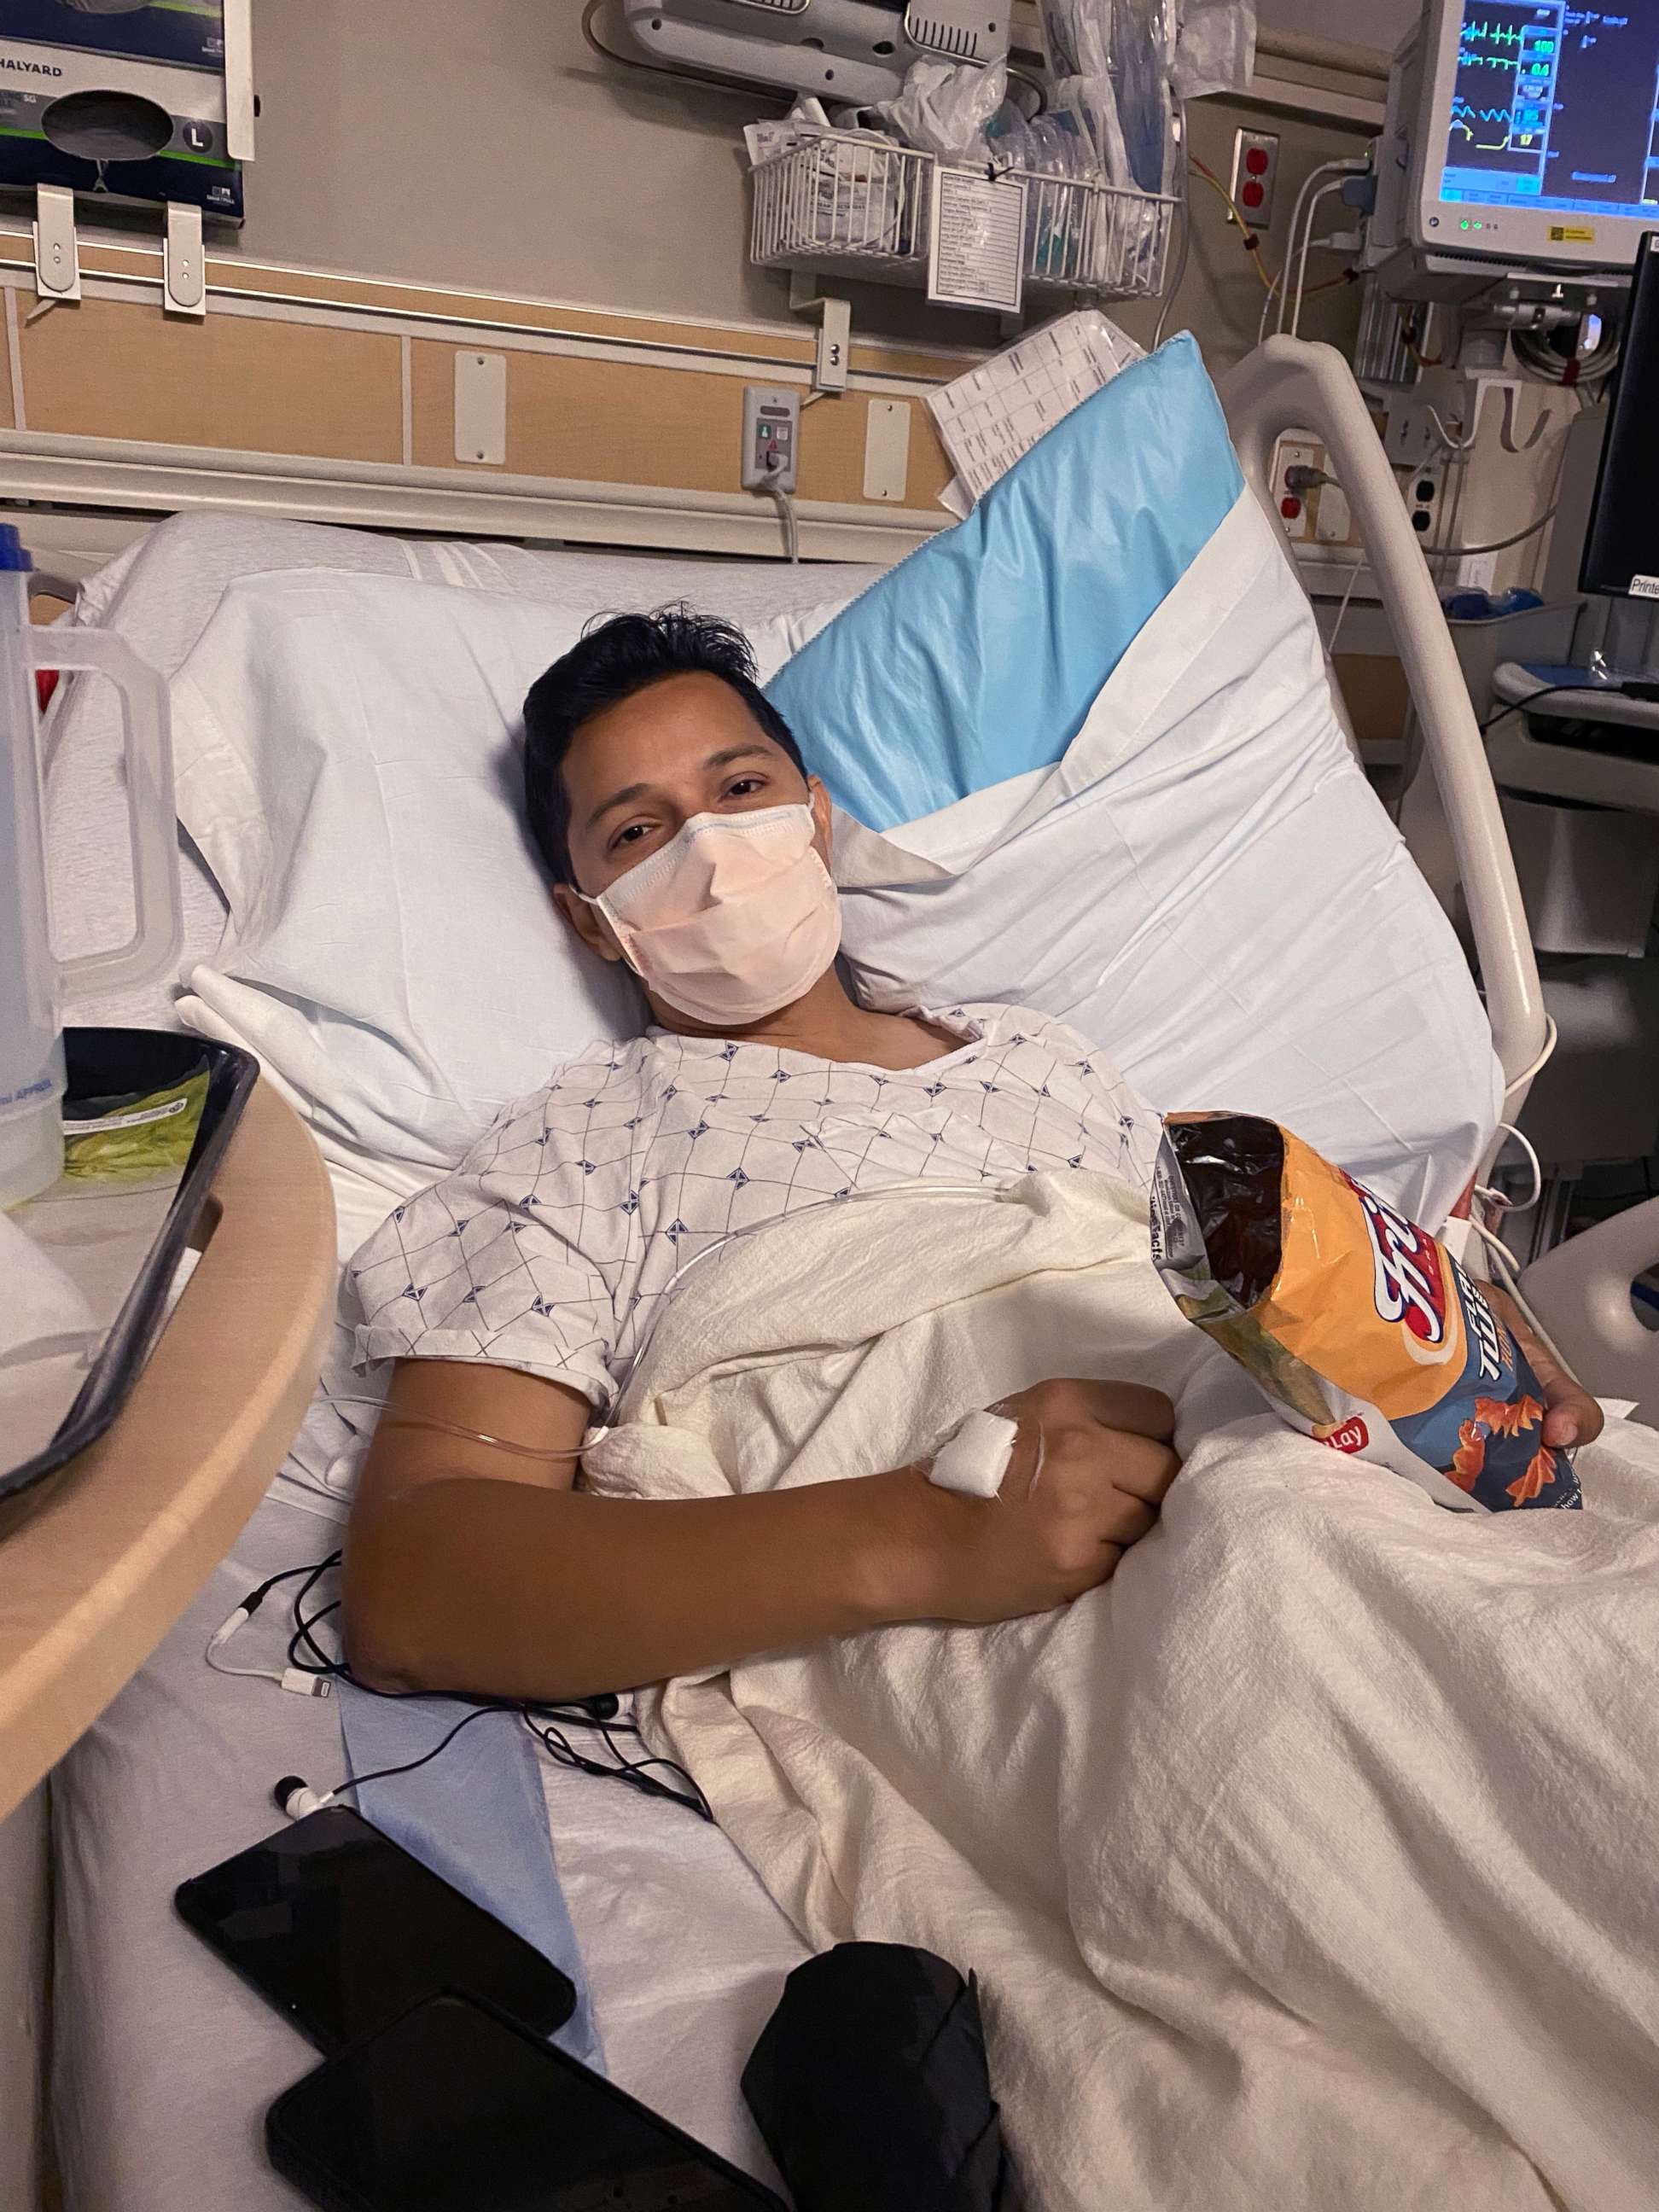 PHOTO: ABC News' Armando Garcia wakes up from surgery at MedStar Georgetown University Hospital in Washington, D.C.